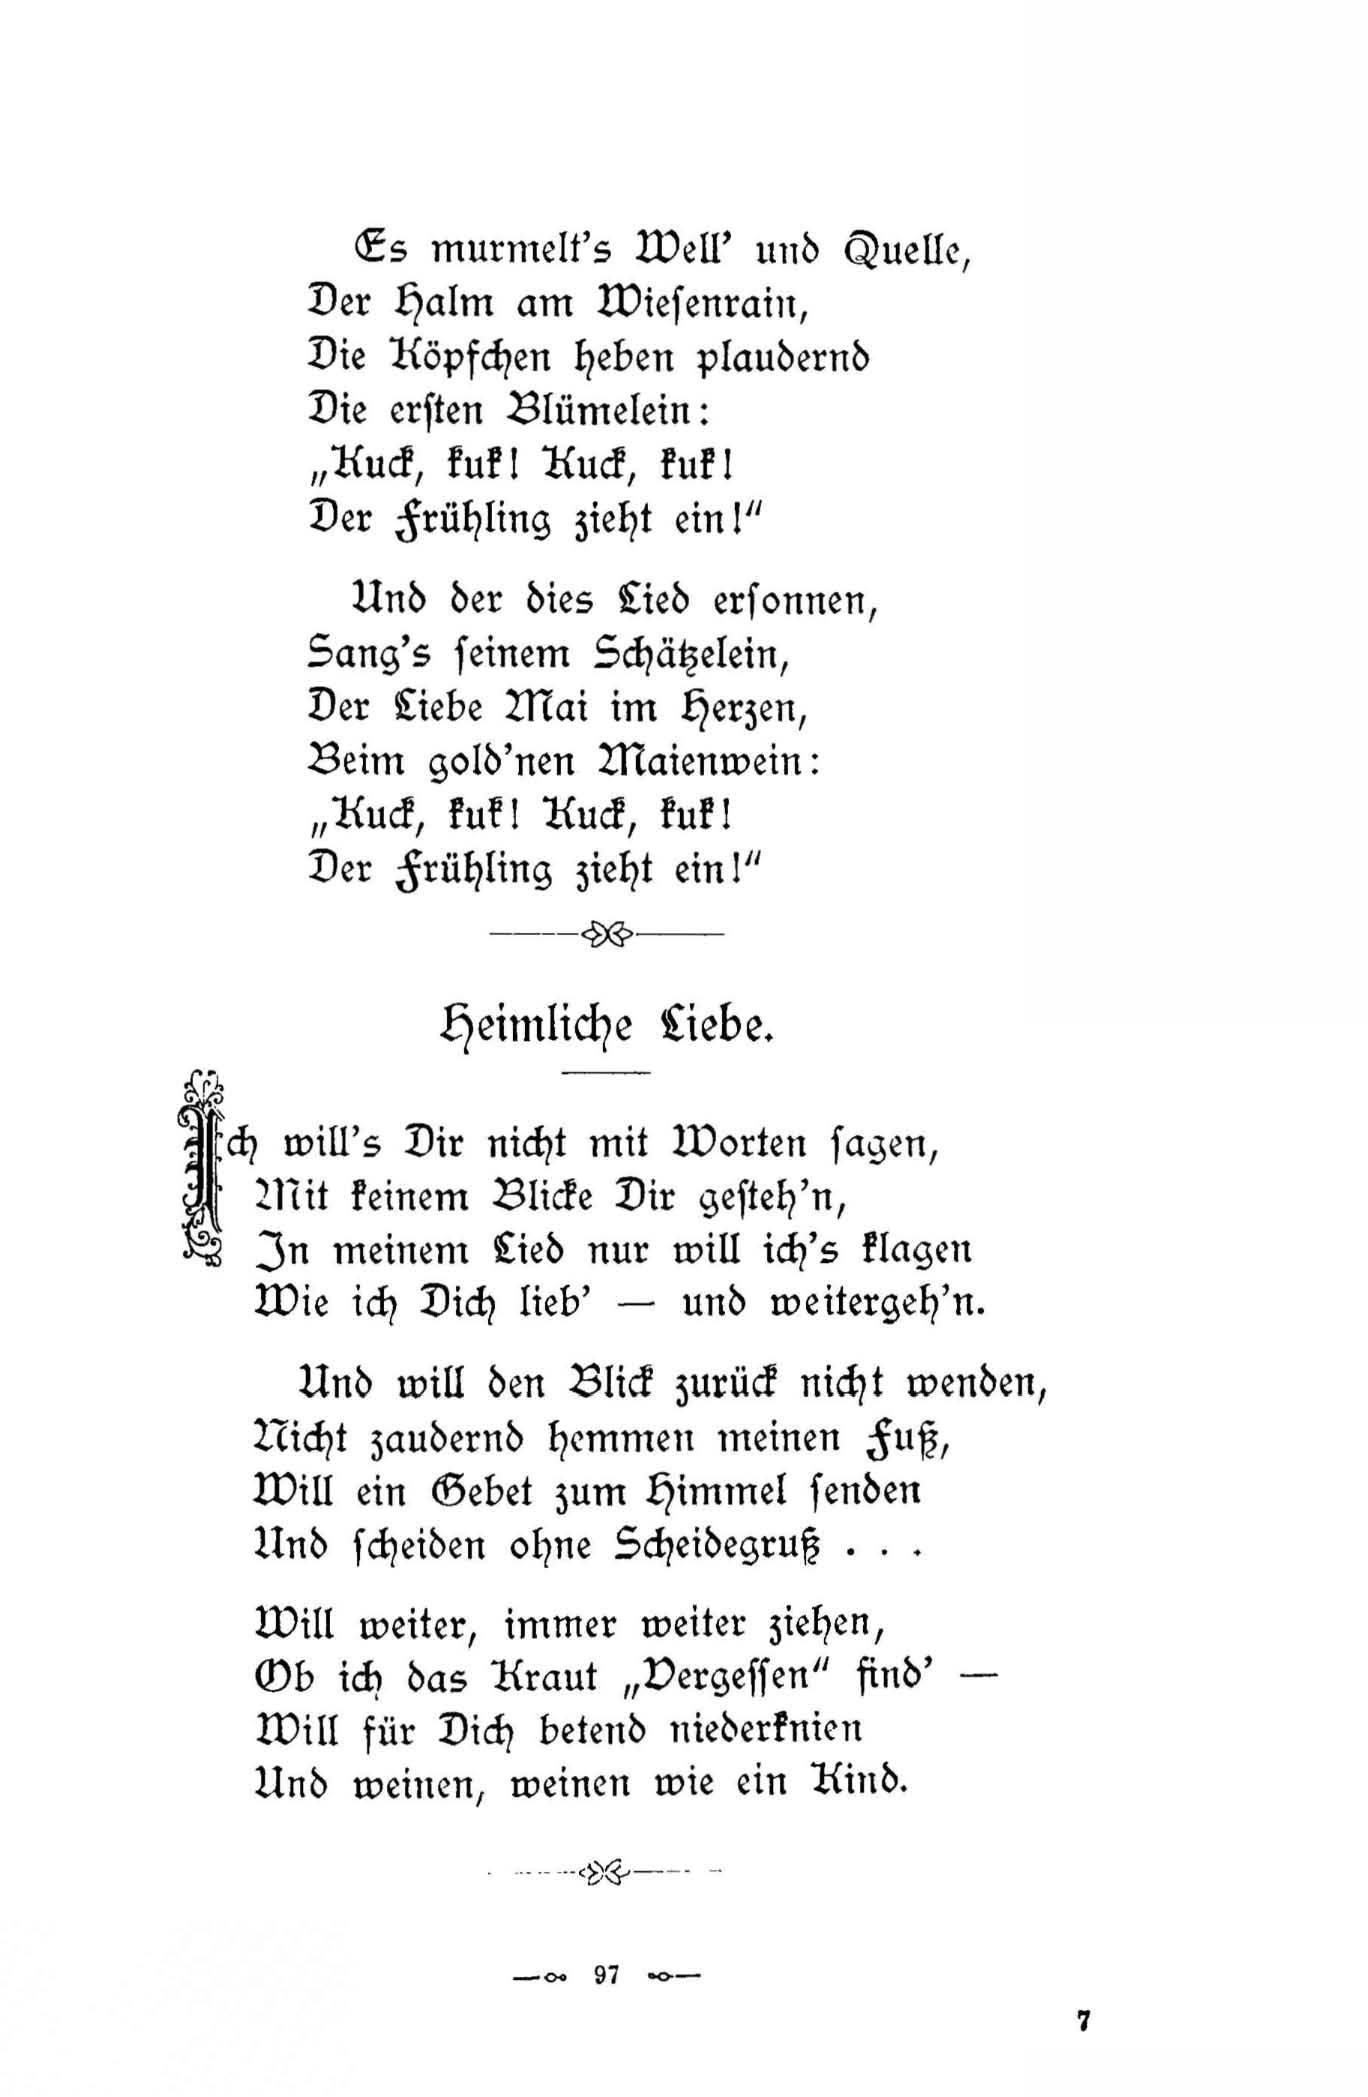 Kuckuksruf (1896) | 2. (97) Main body of text